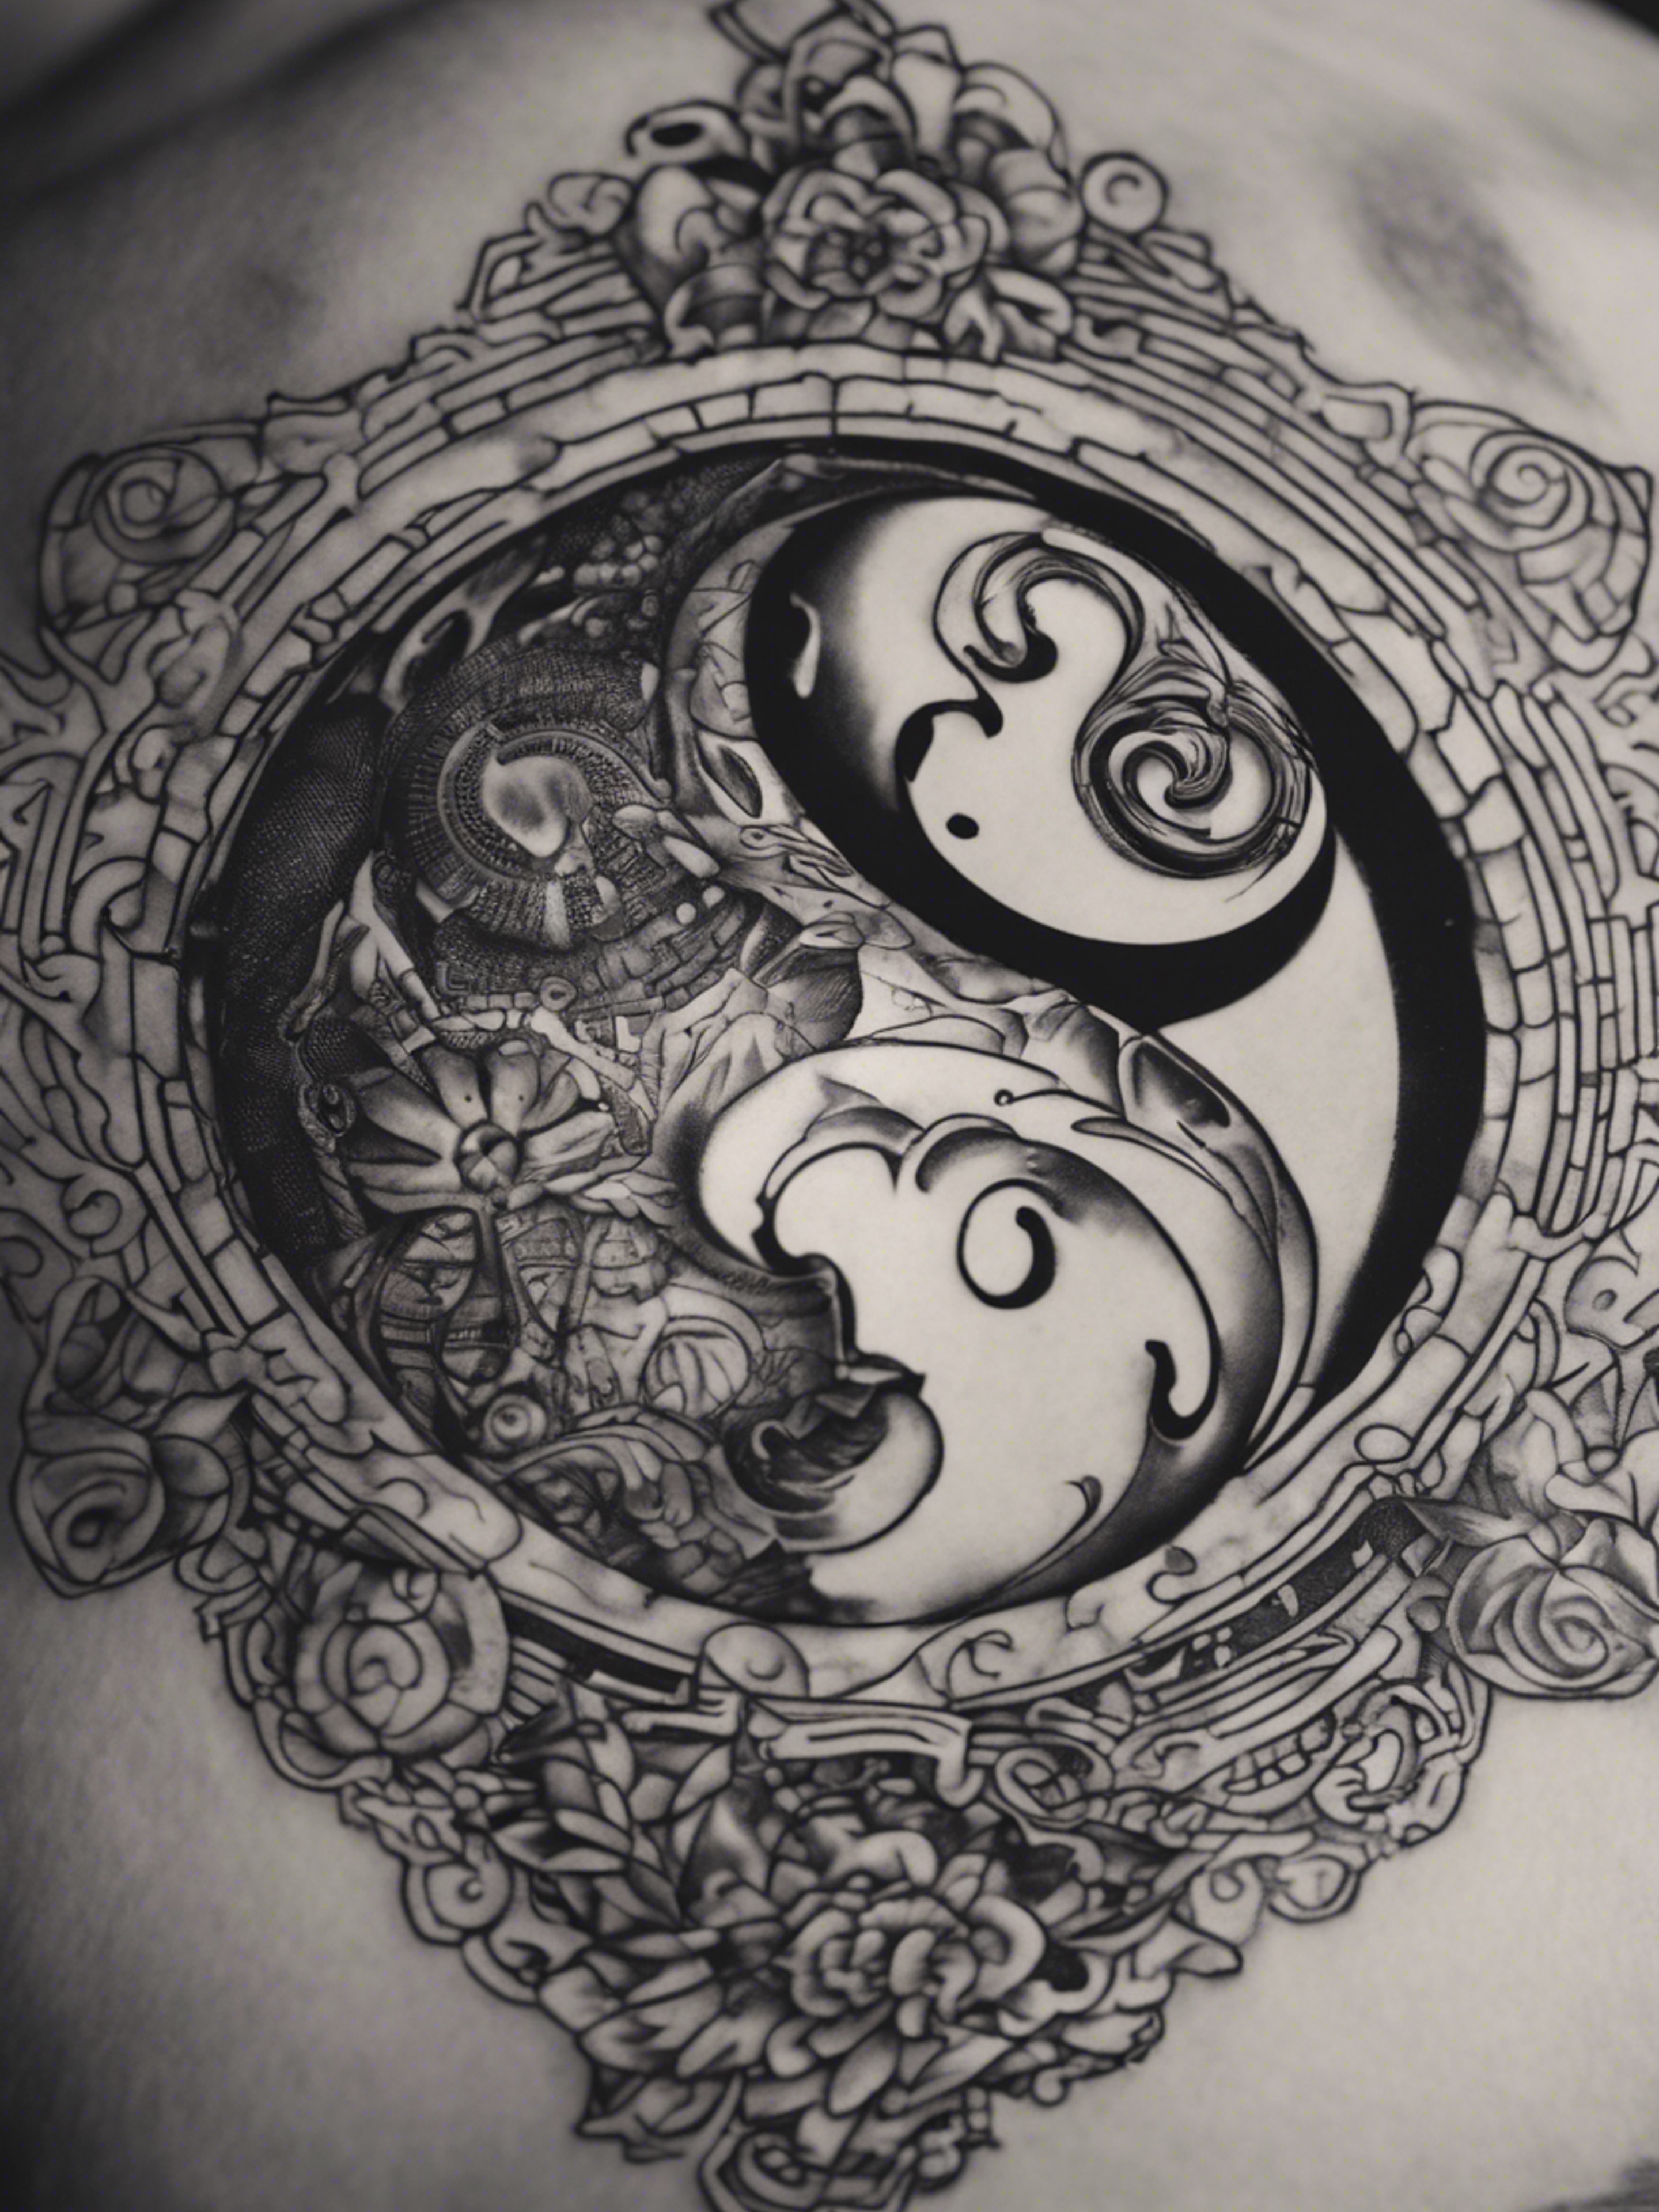 A black and gray tattoo demonstrating the sharp contrast of yin and yang. Sfondo[cf6688009cd14e619f30]